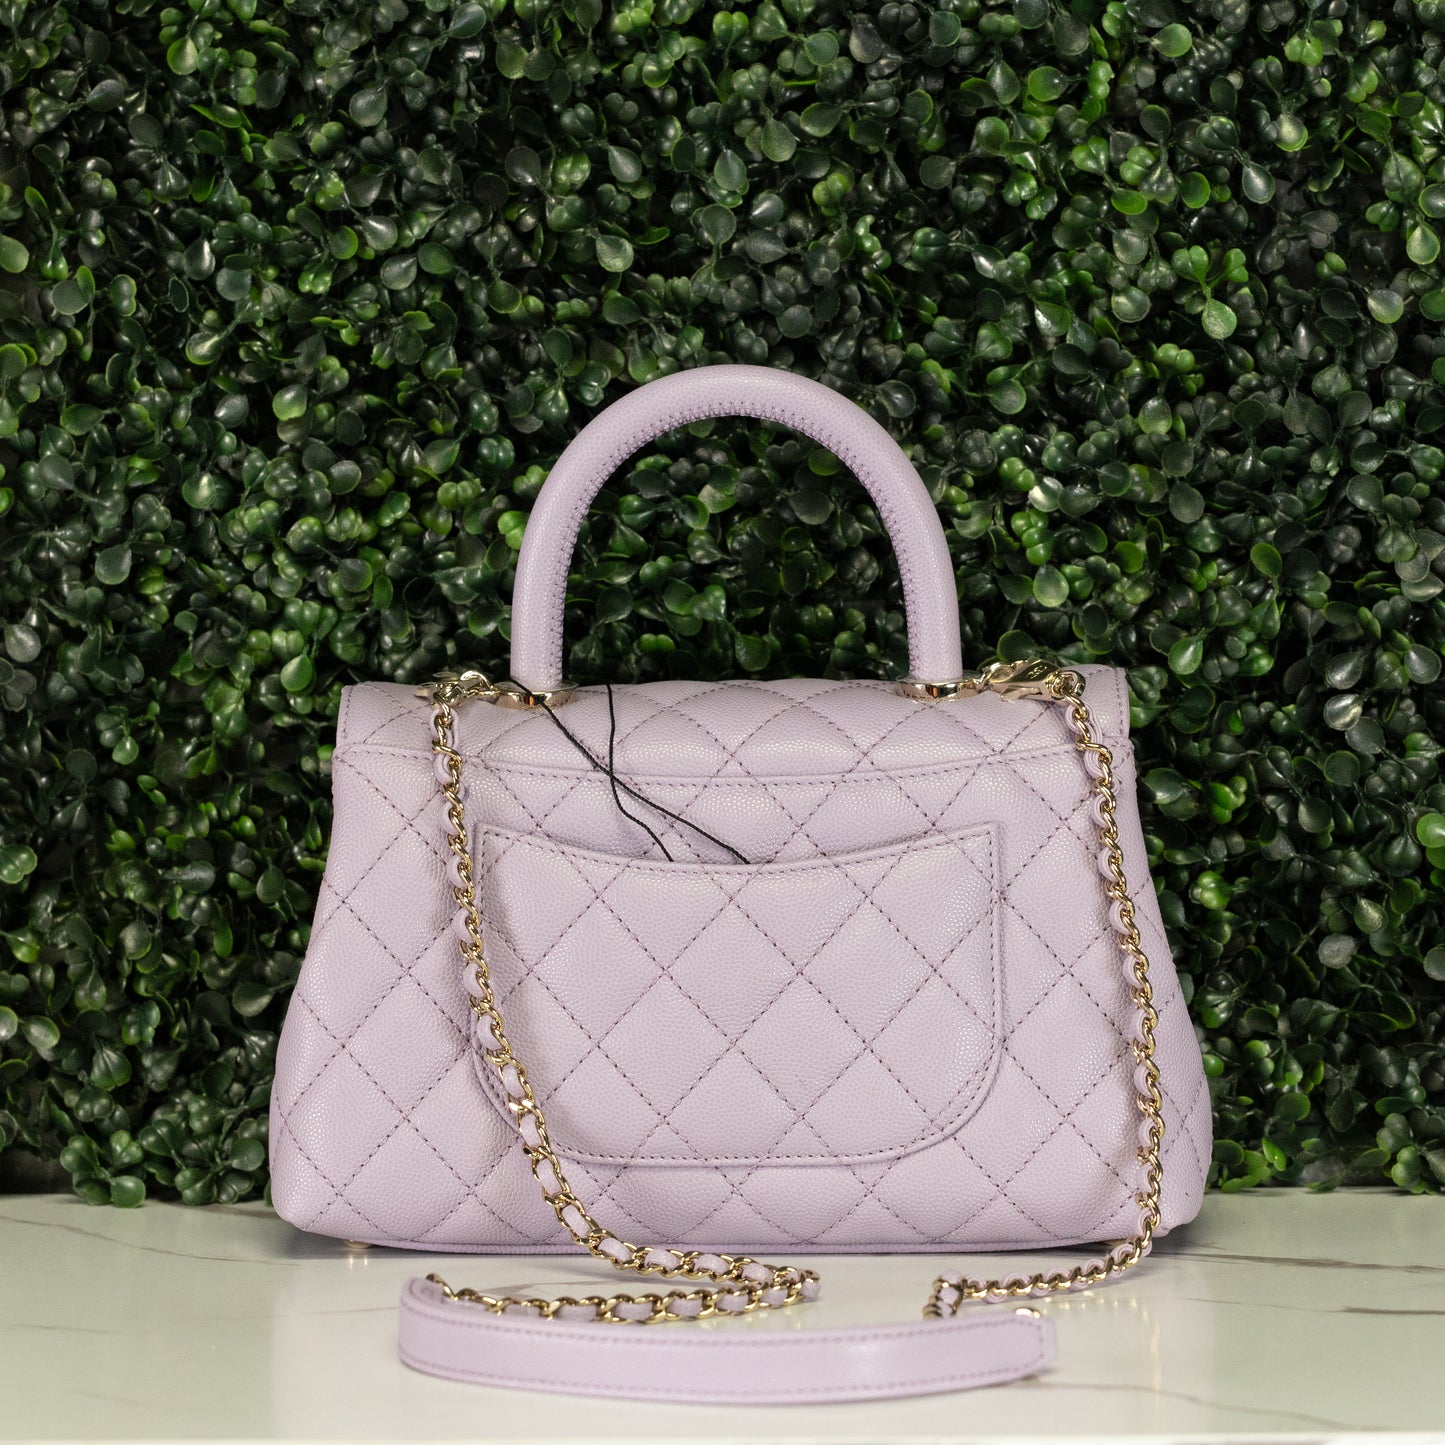 Chanel Flapbag with Handle in Vea/Violet